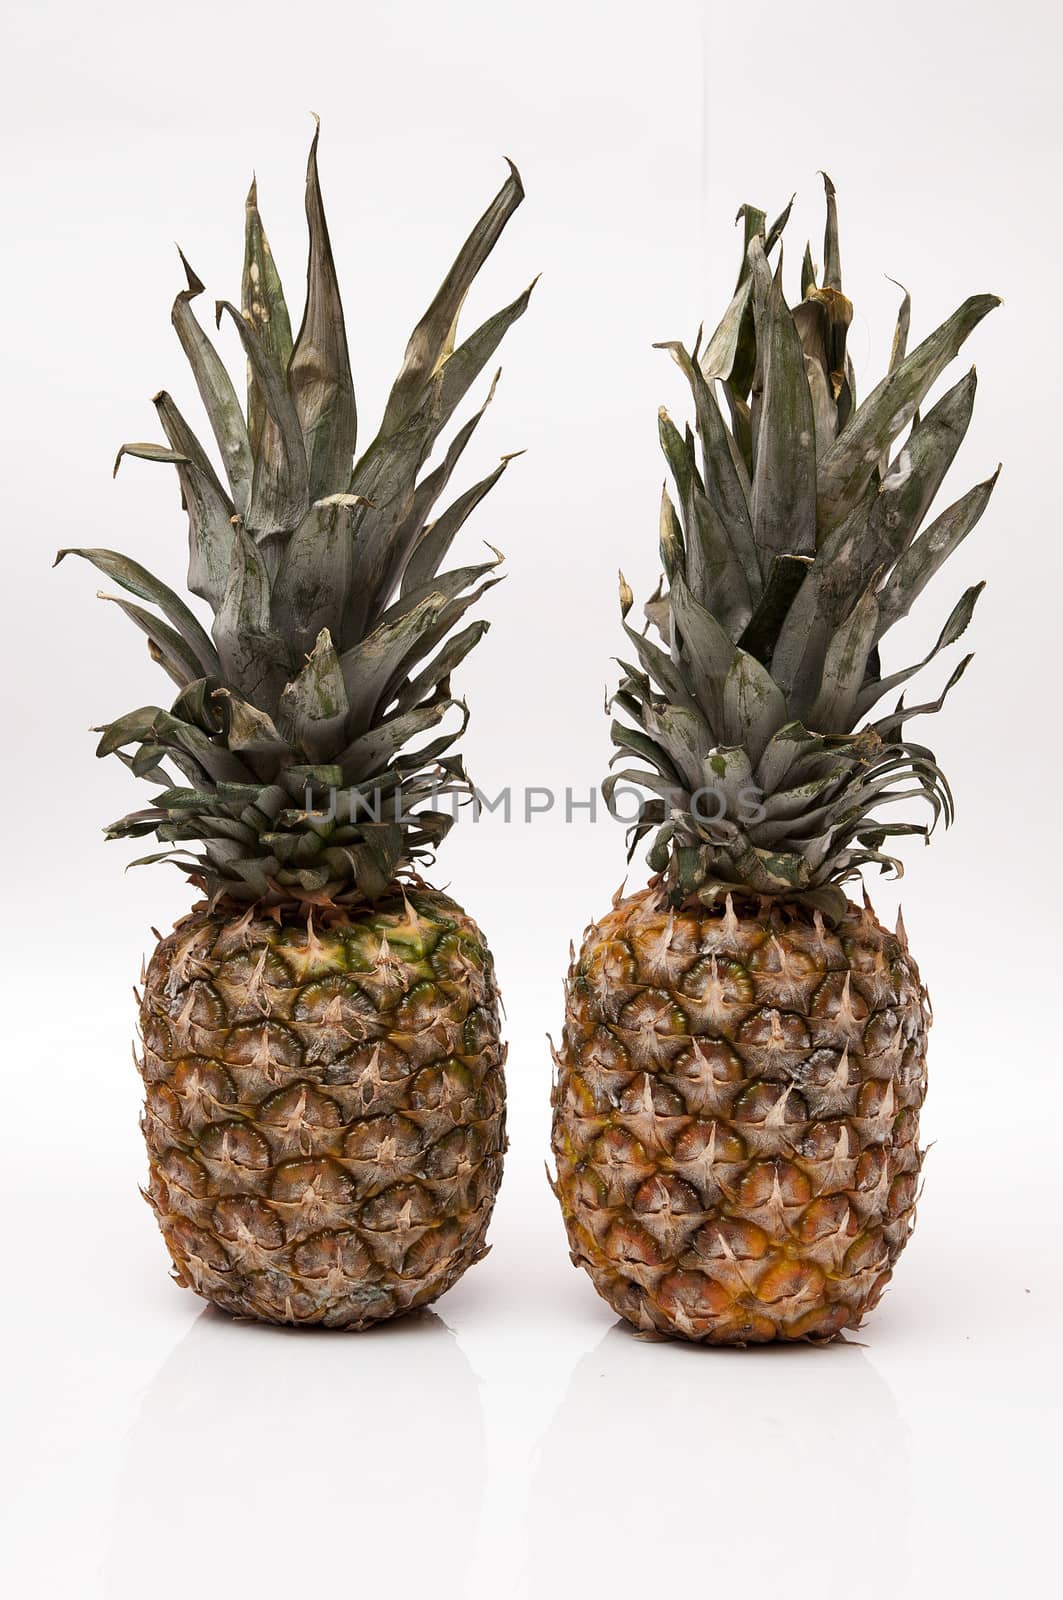 very sweet and juicy pineapples